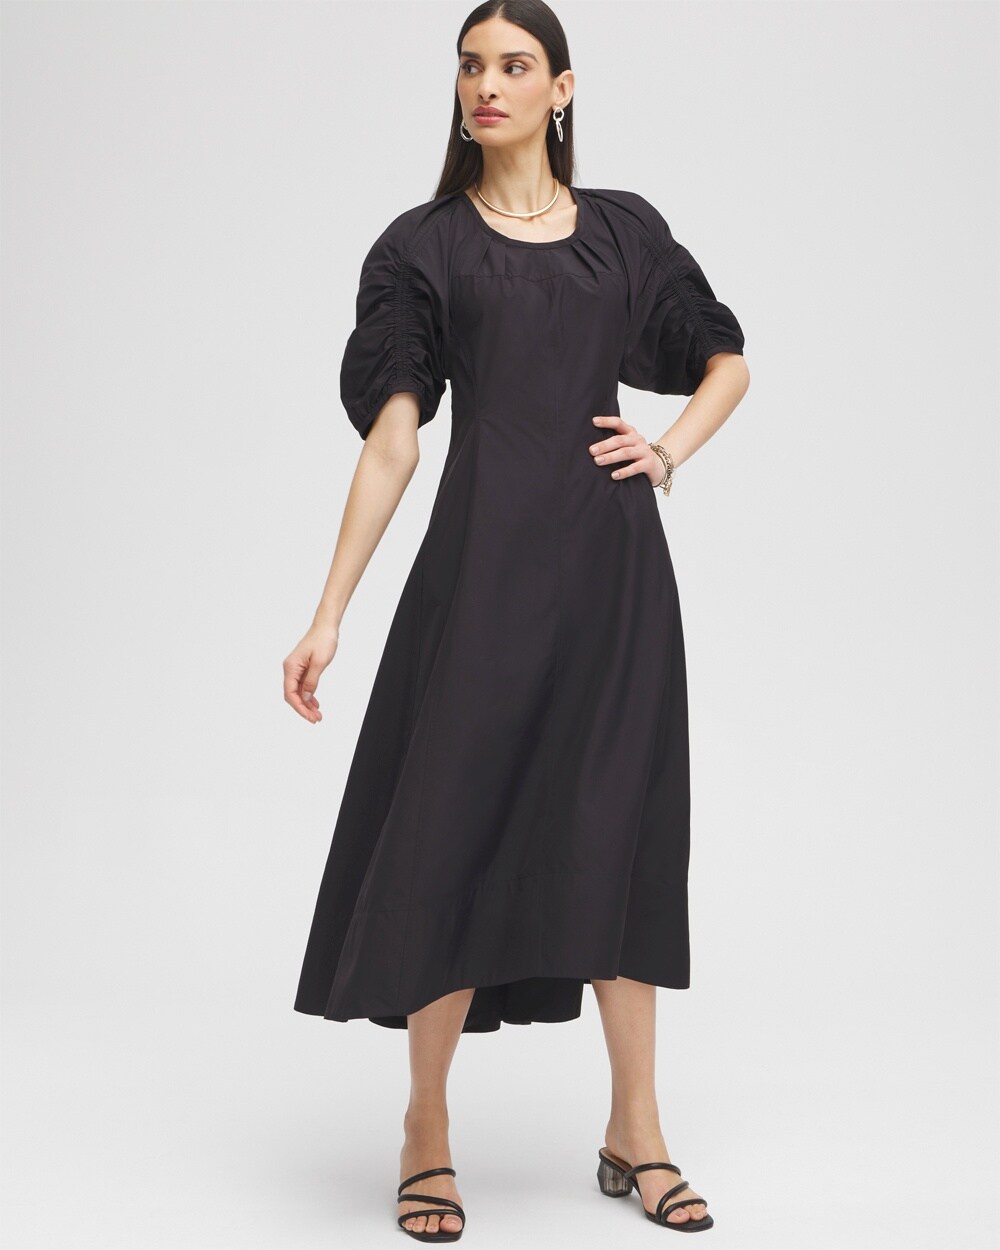 Black Label™ Ruched Sleeve Dress